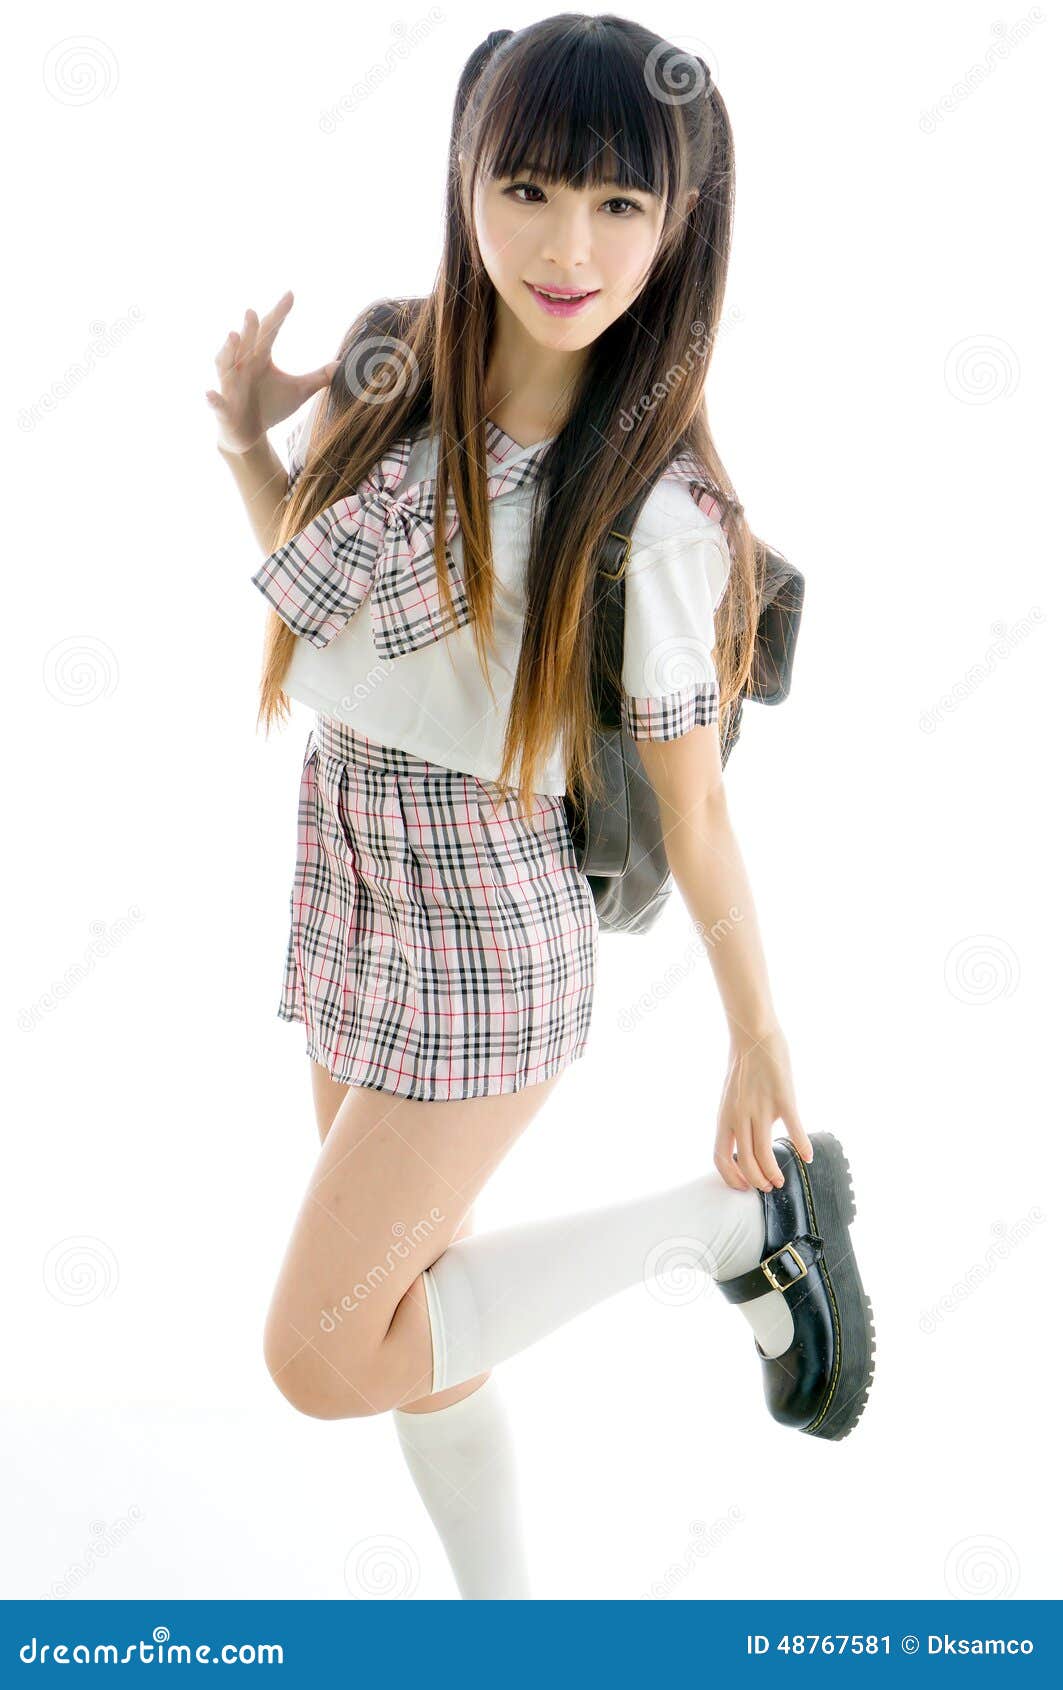 donald gabie add photo asian schoolgirl in uniform